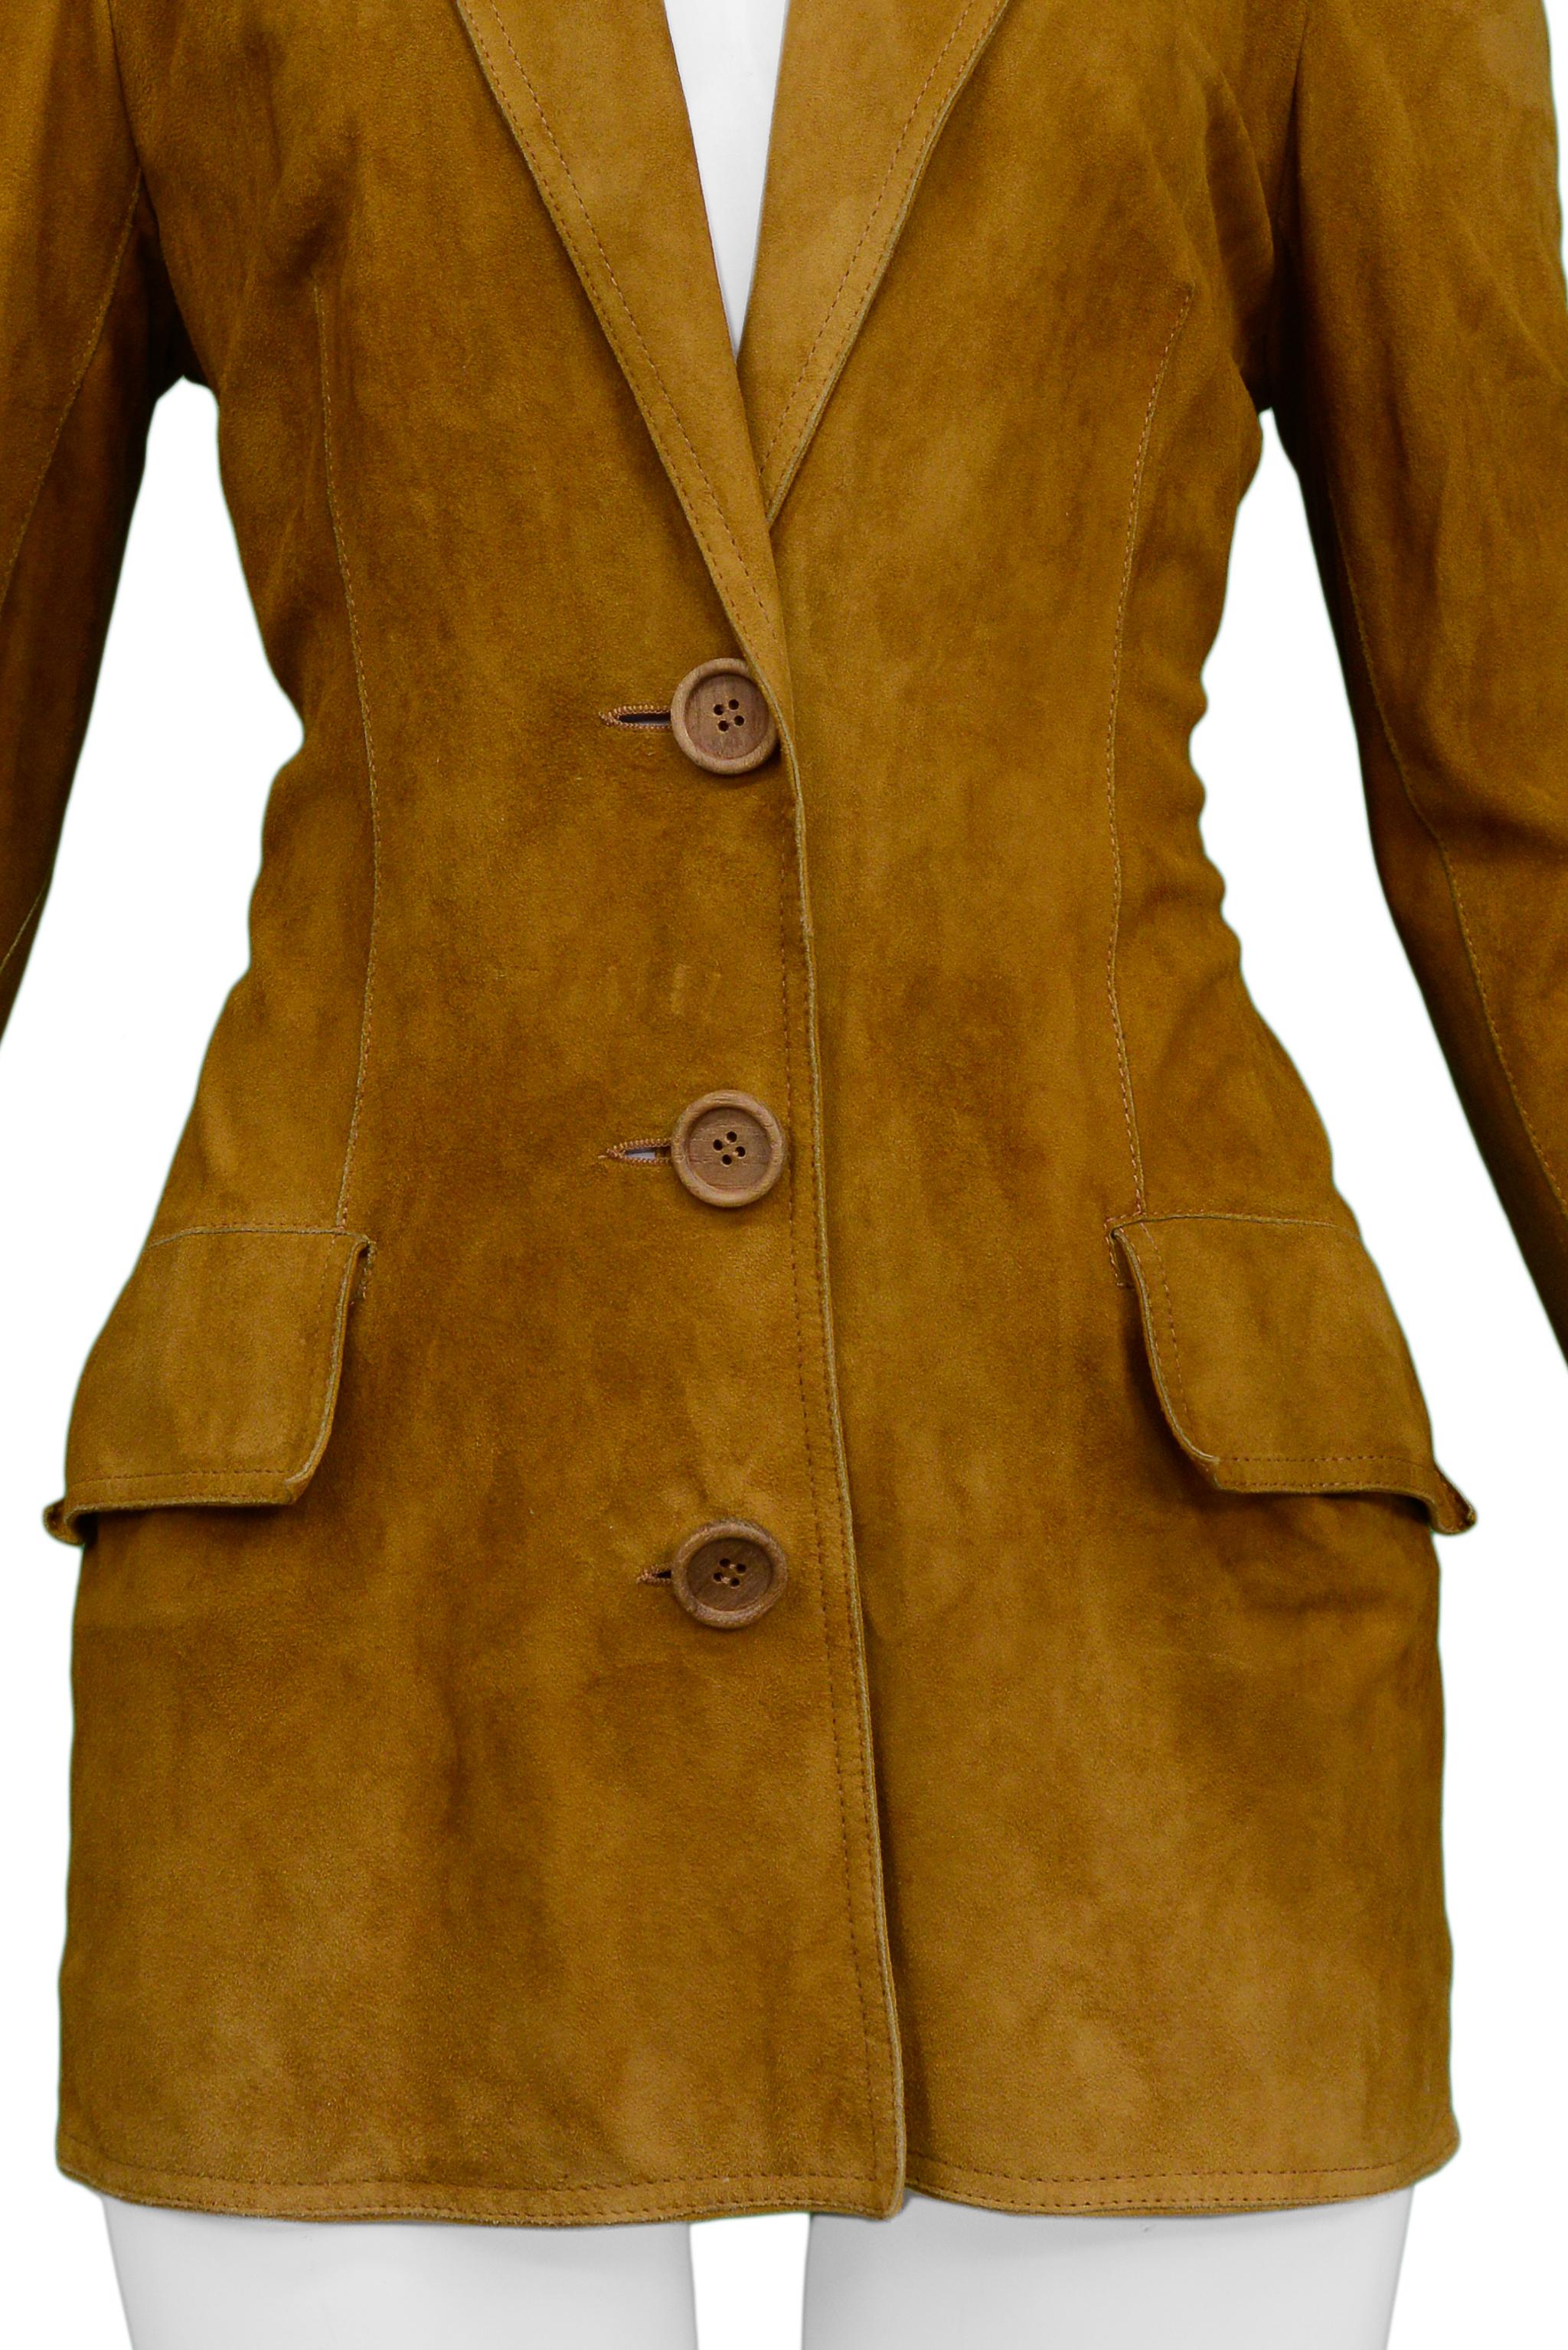 Christian Dior by John Galliano Veste blazer en daim Brown avec boutons Pour femmes en vente